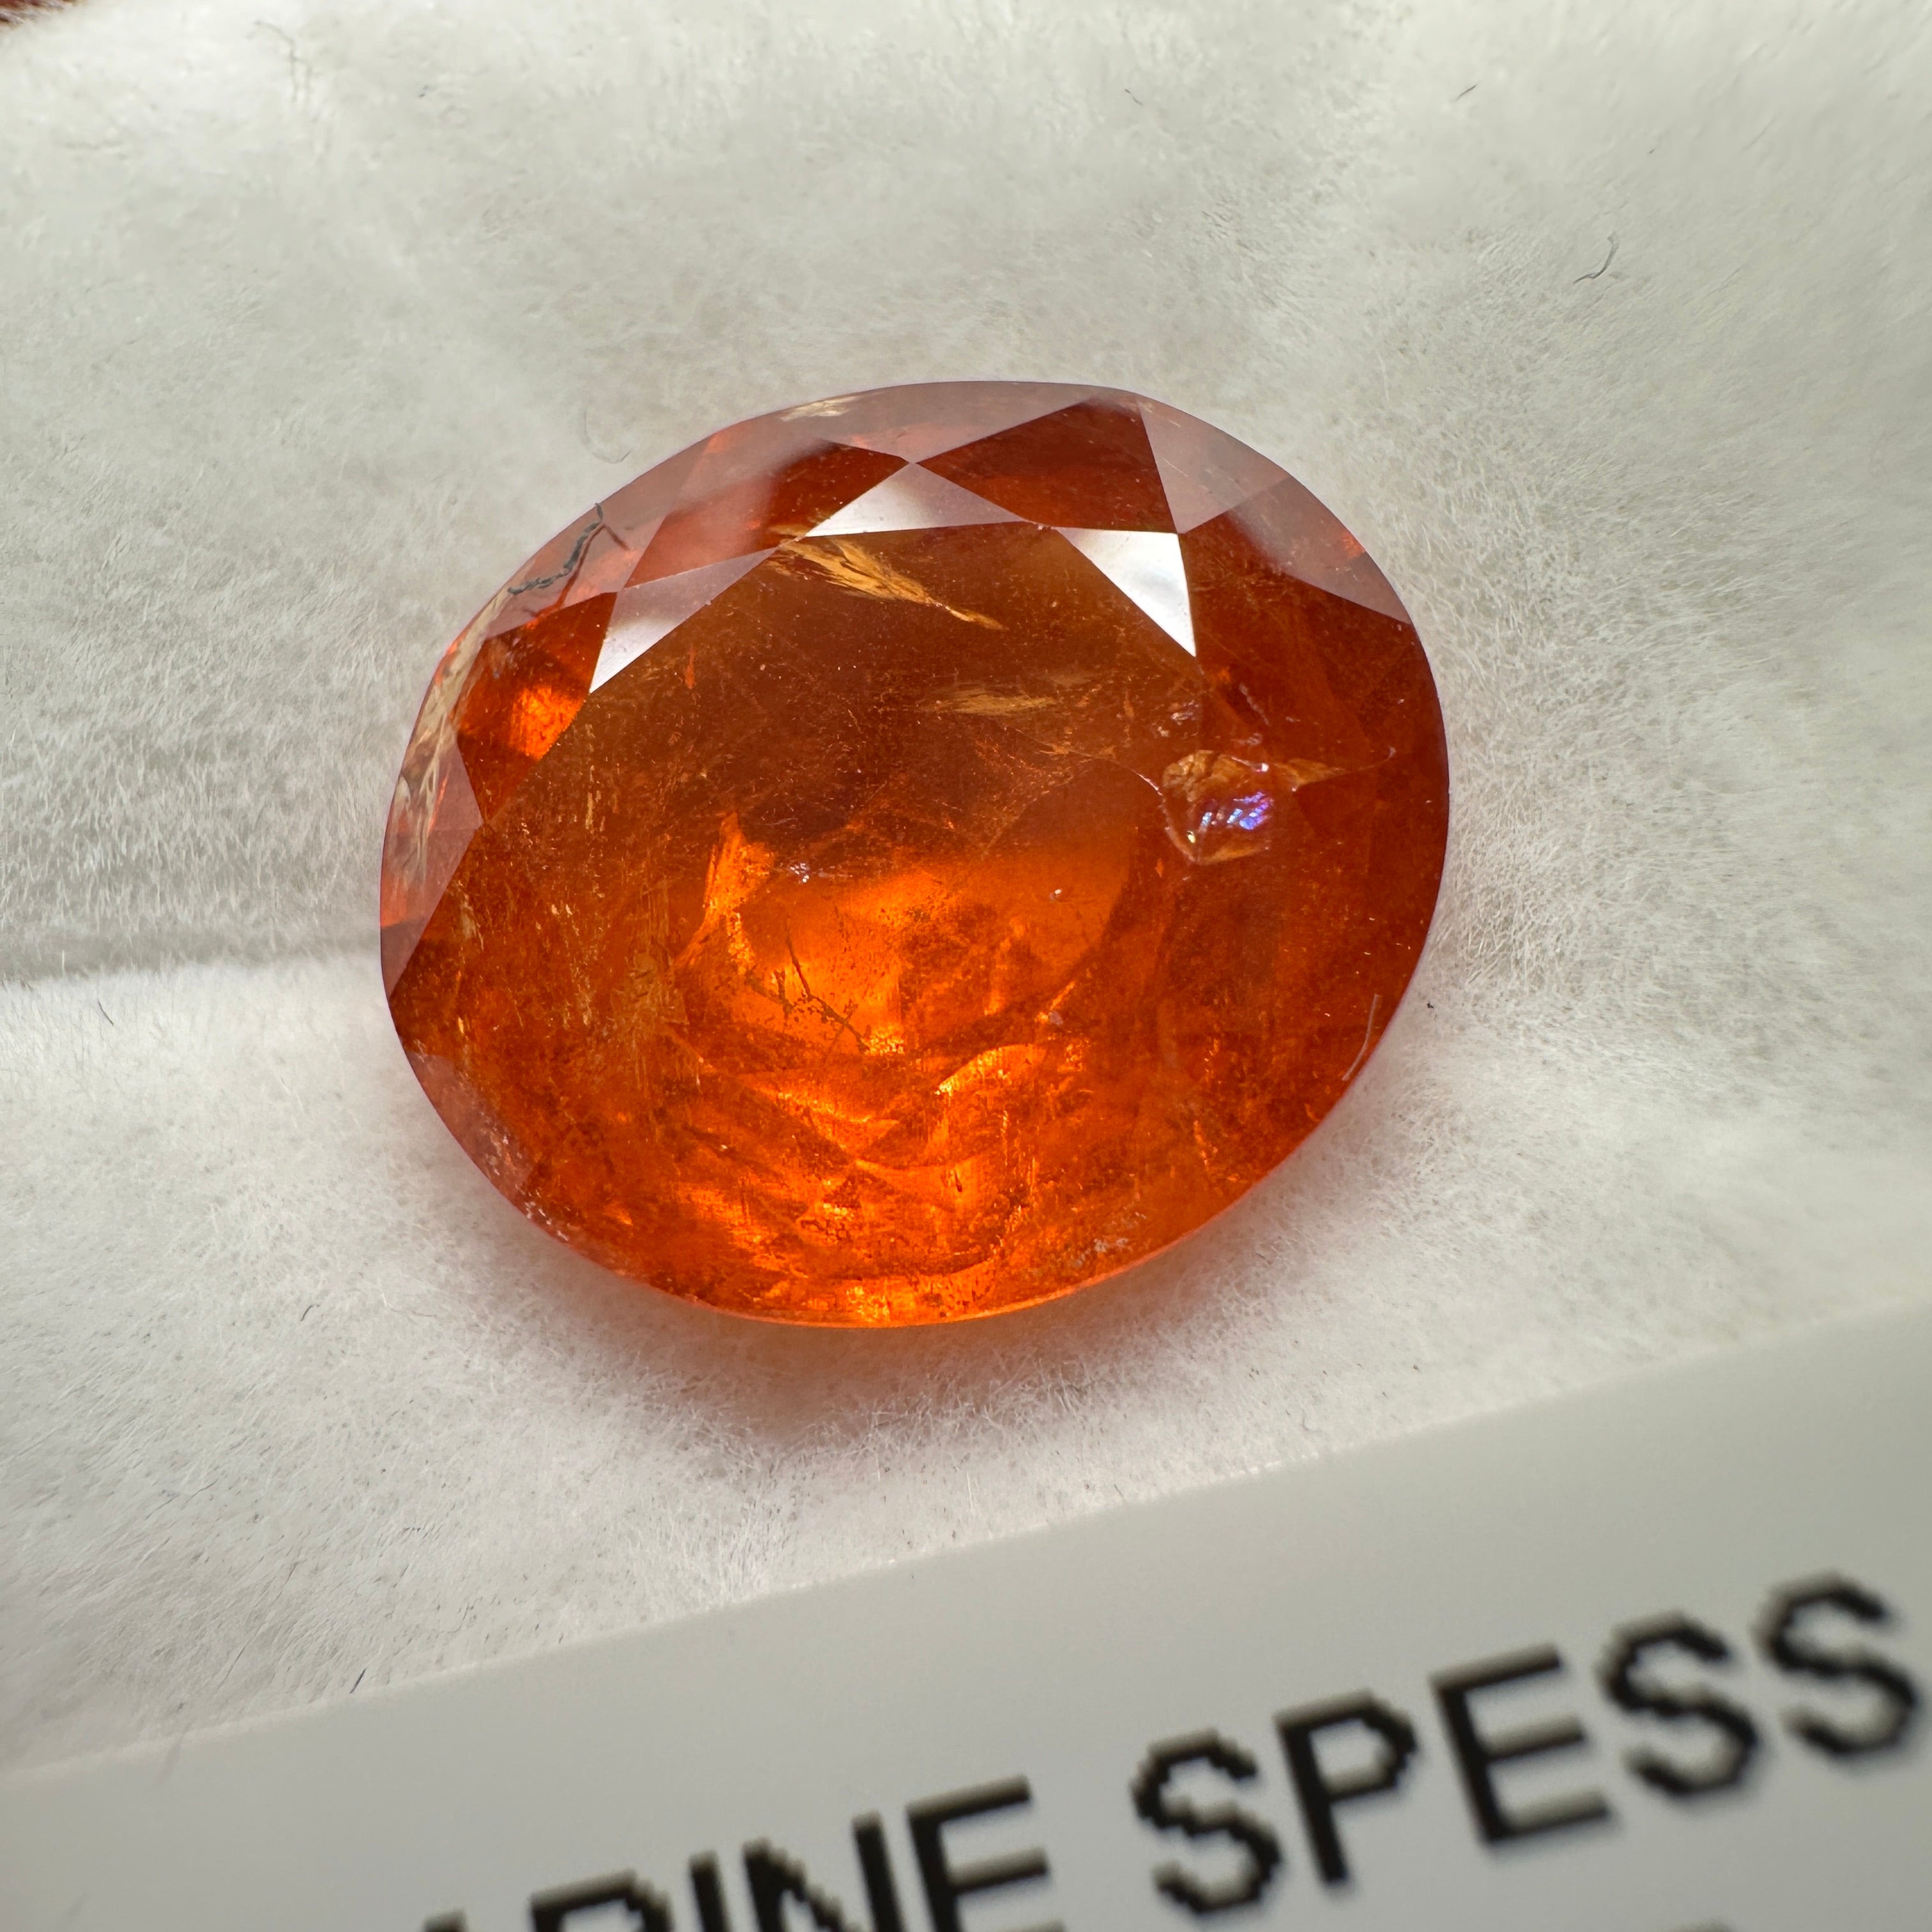 9.09ct Mandarin Spessartite Garnet, Untreated Unheated. 12.8 x 11.2 x 6.8mm, stone has some veils, slight sugar and inclusions